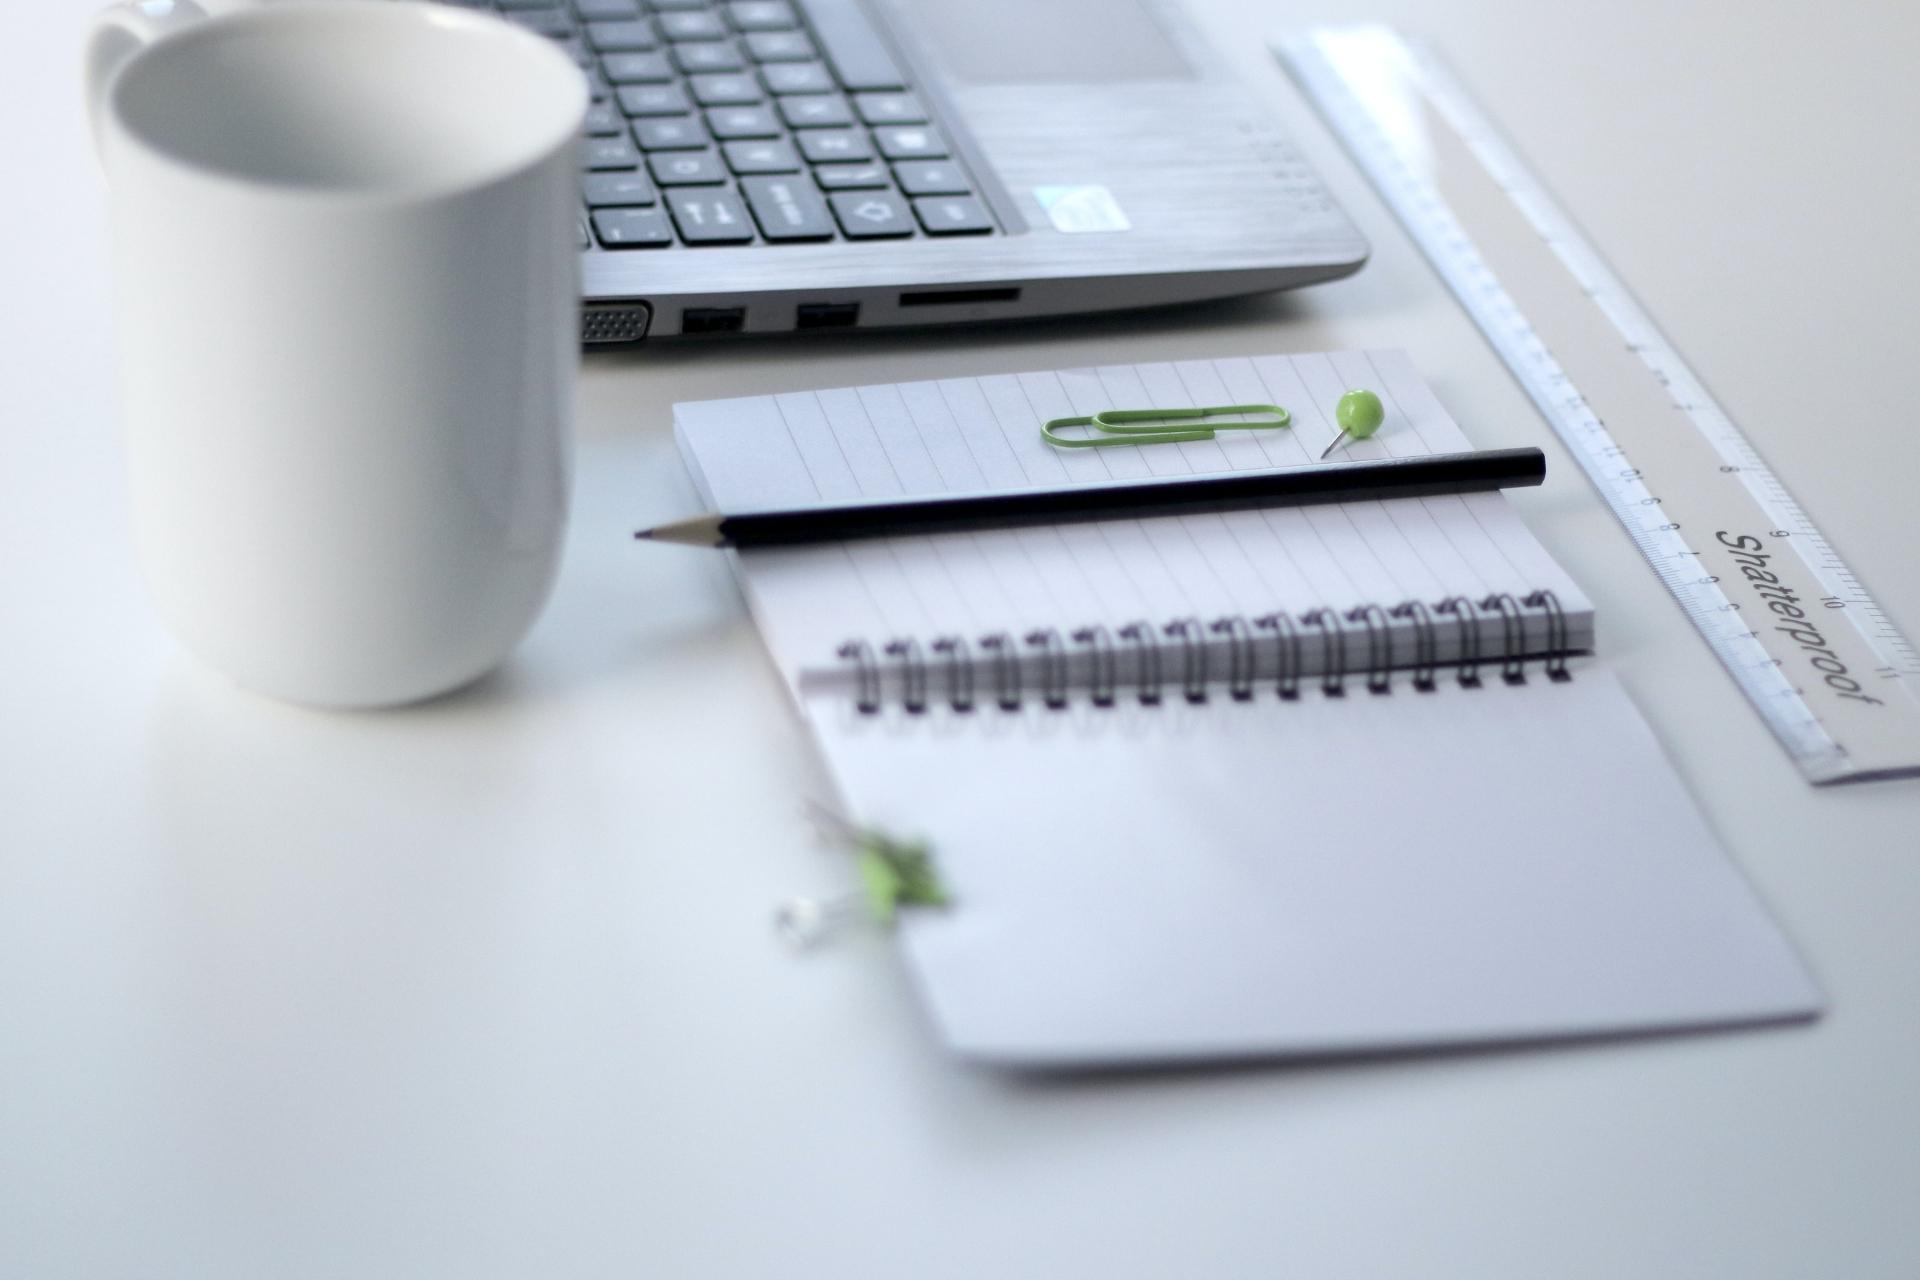 Laptop, ruler, mug, and notepad on top of desk